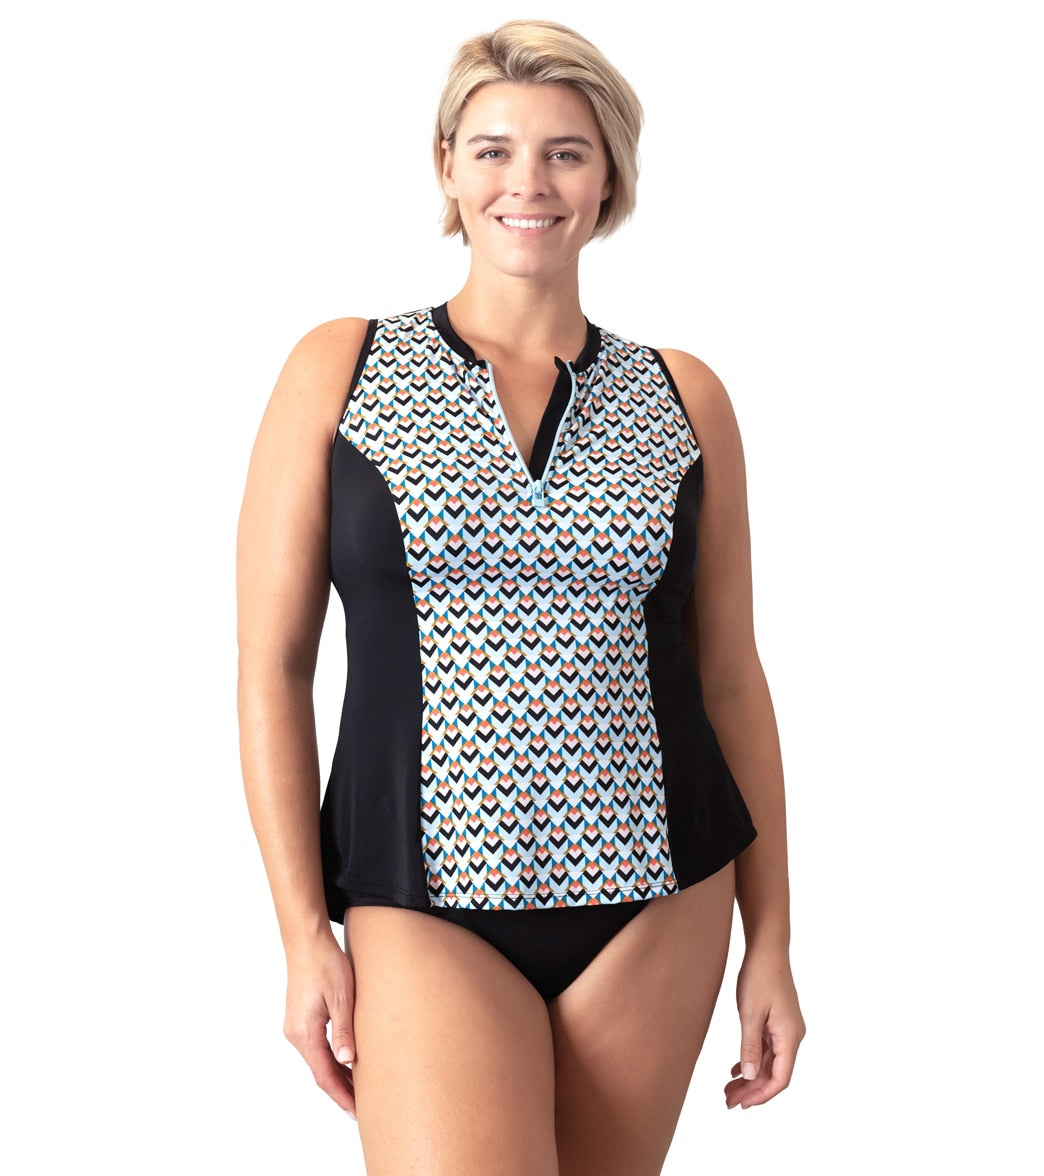 Fit4U Women's Plus Size Geomatic Zip Sleeveless Swim Shirt at SwimOutlet.com